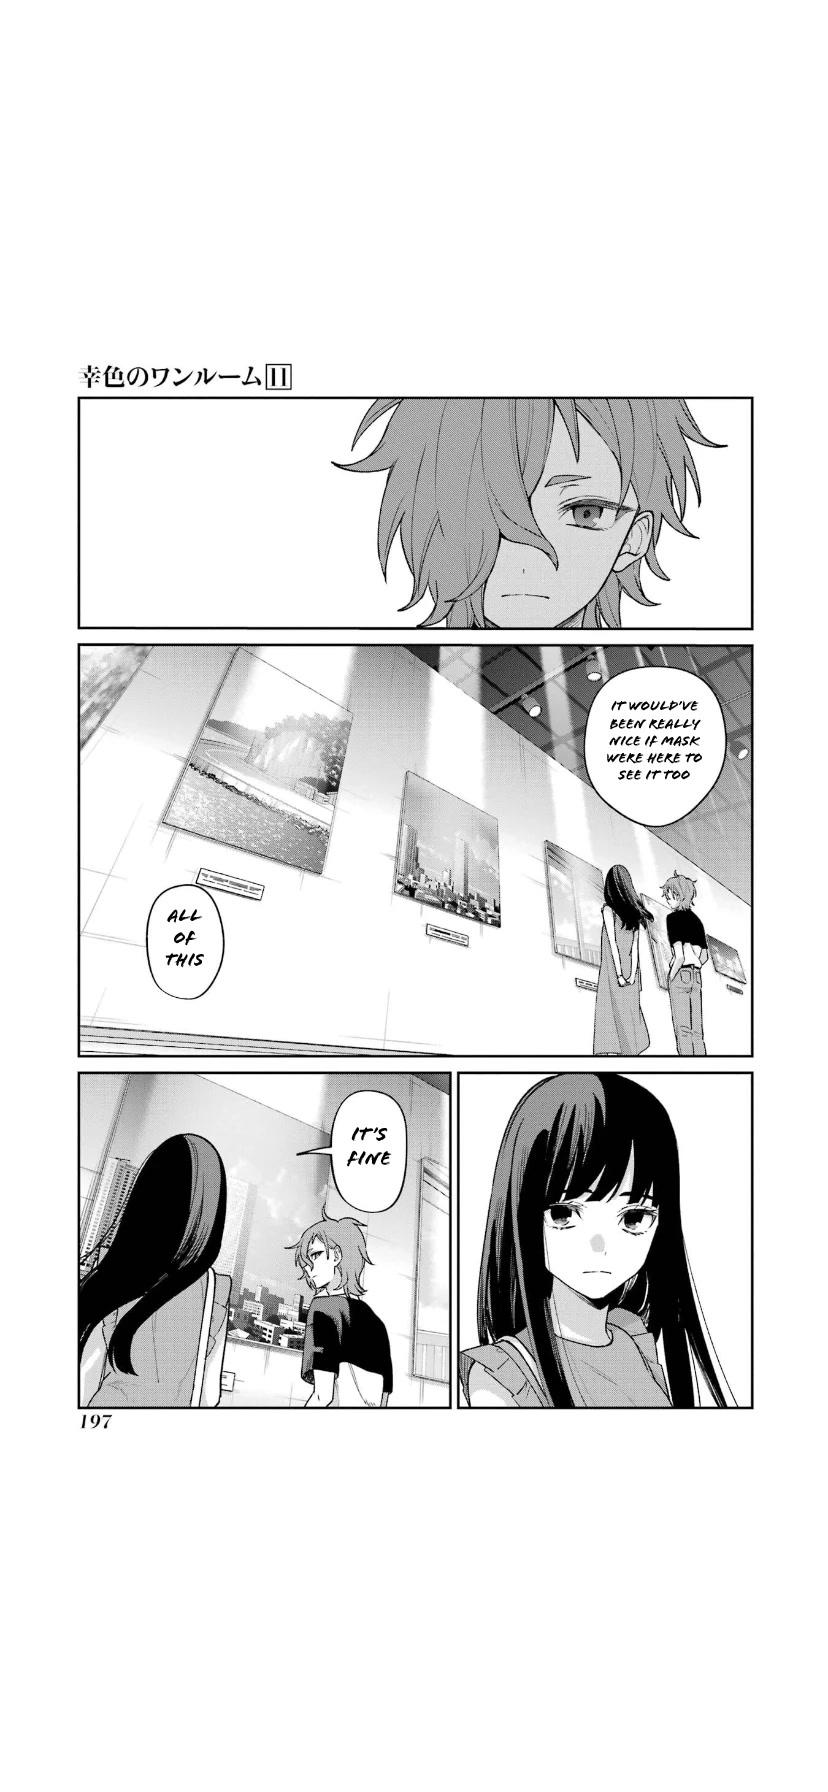 Read Sachi-Iro No One Room Chapter 68 [End] on Mangakakalot